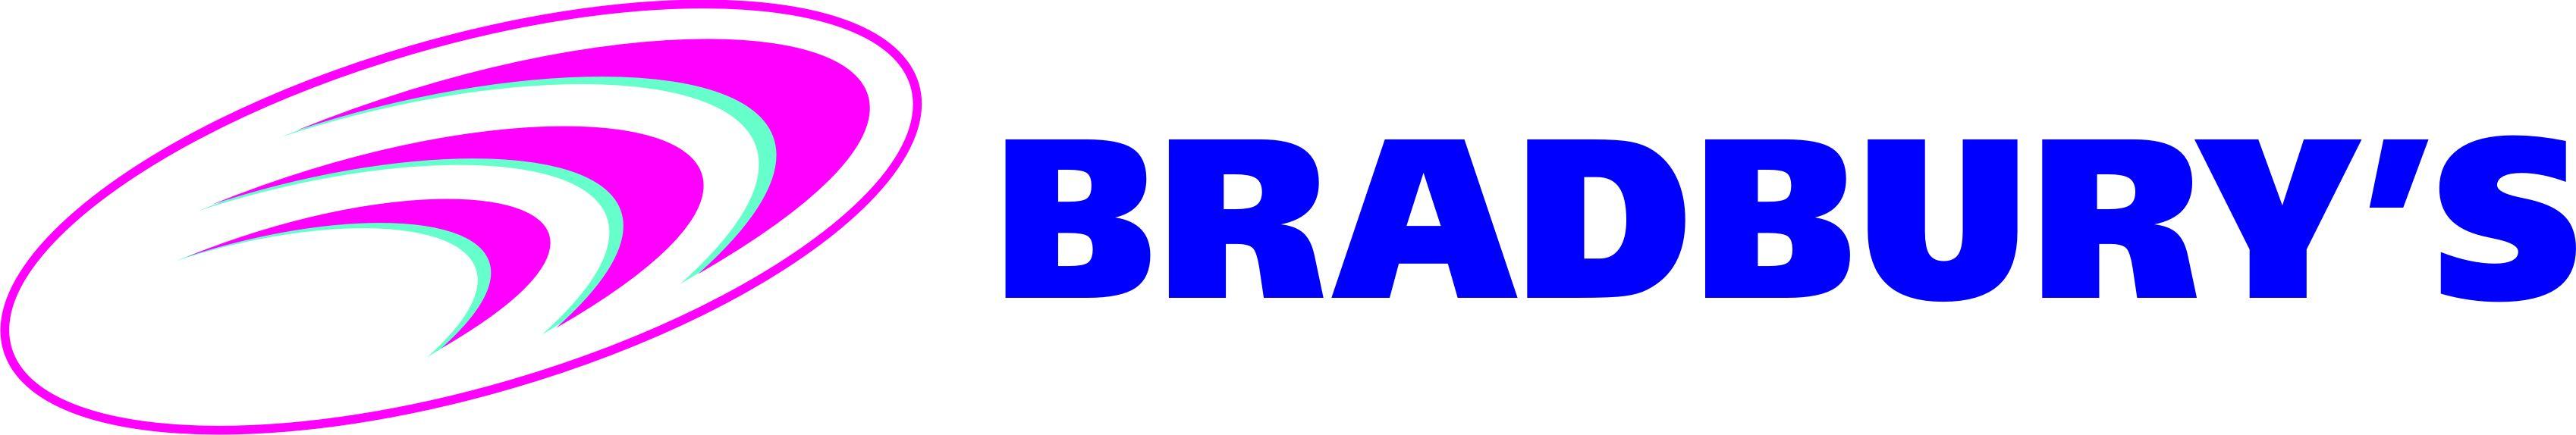 Bradbury Logo - BRADBURY-LOGO - SAMBRA: Motor Body Repair | Accident Repair | Panel ...